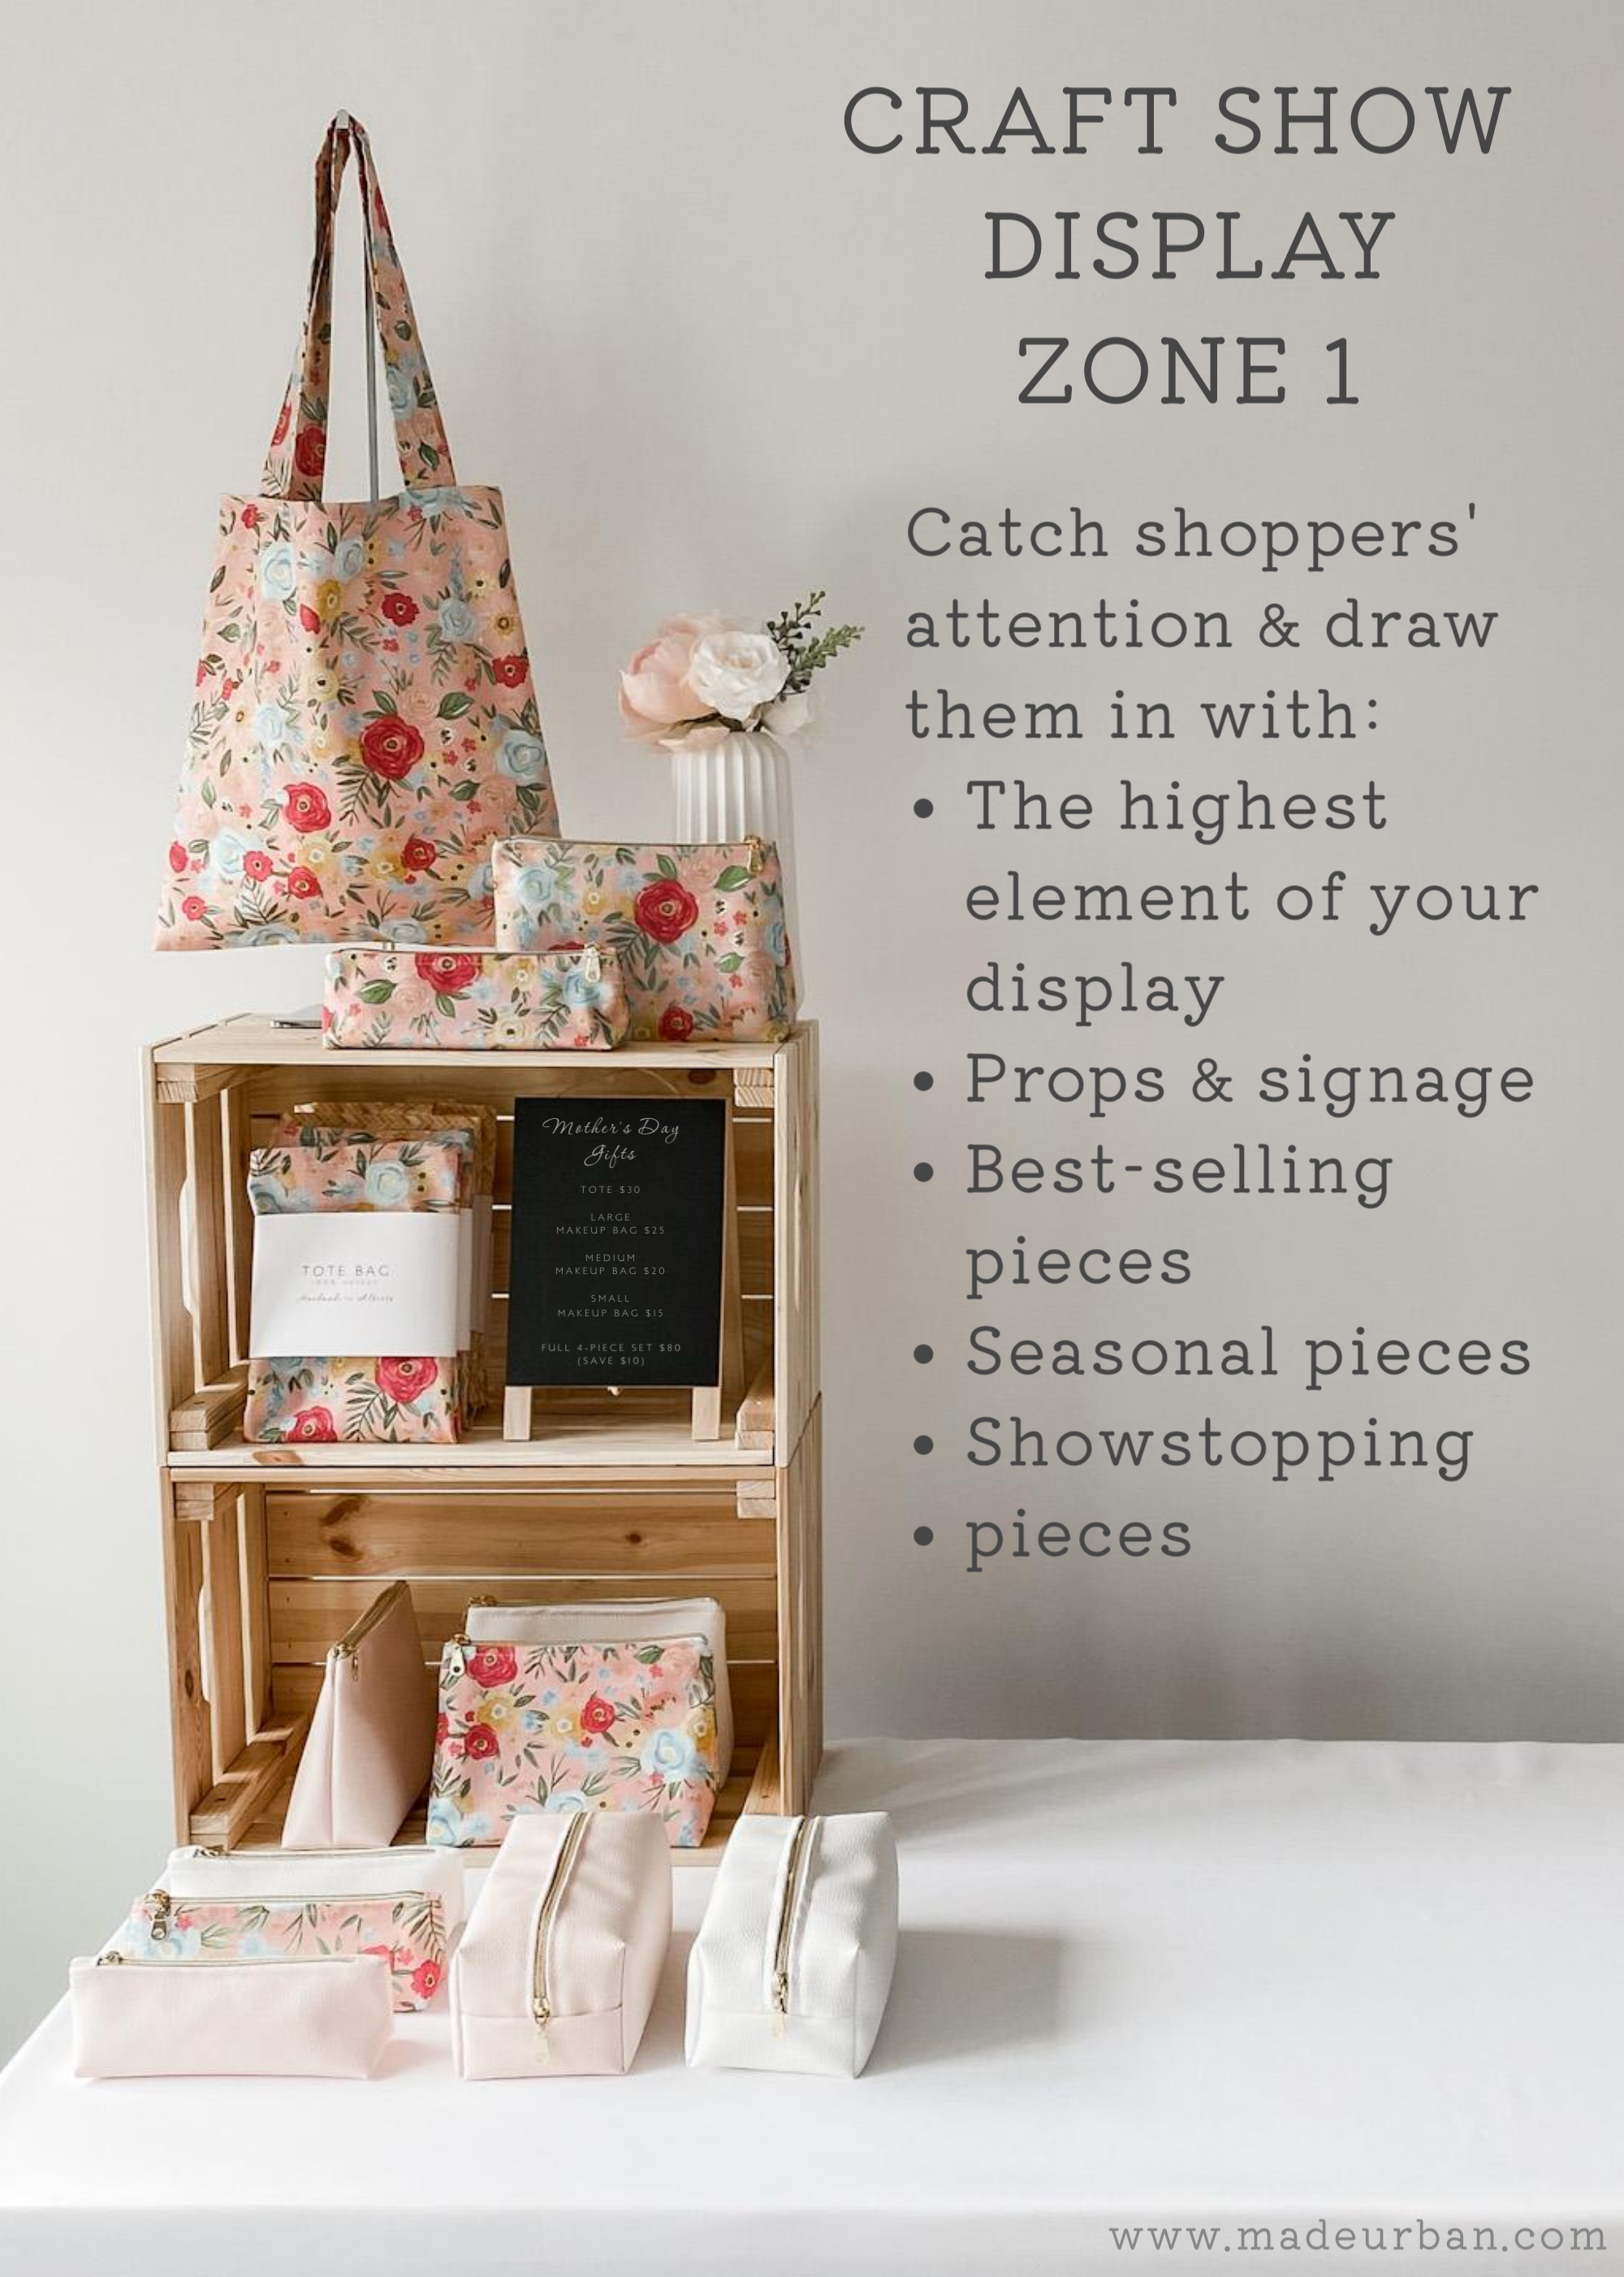 Zone 1 Craft Show Display